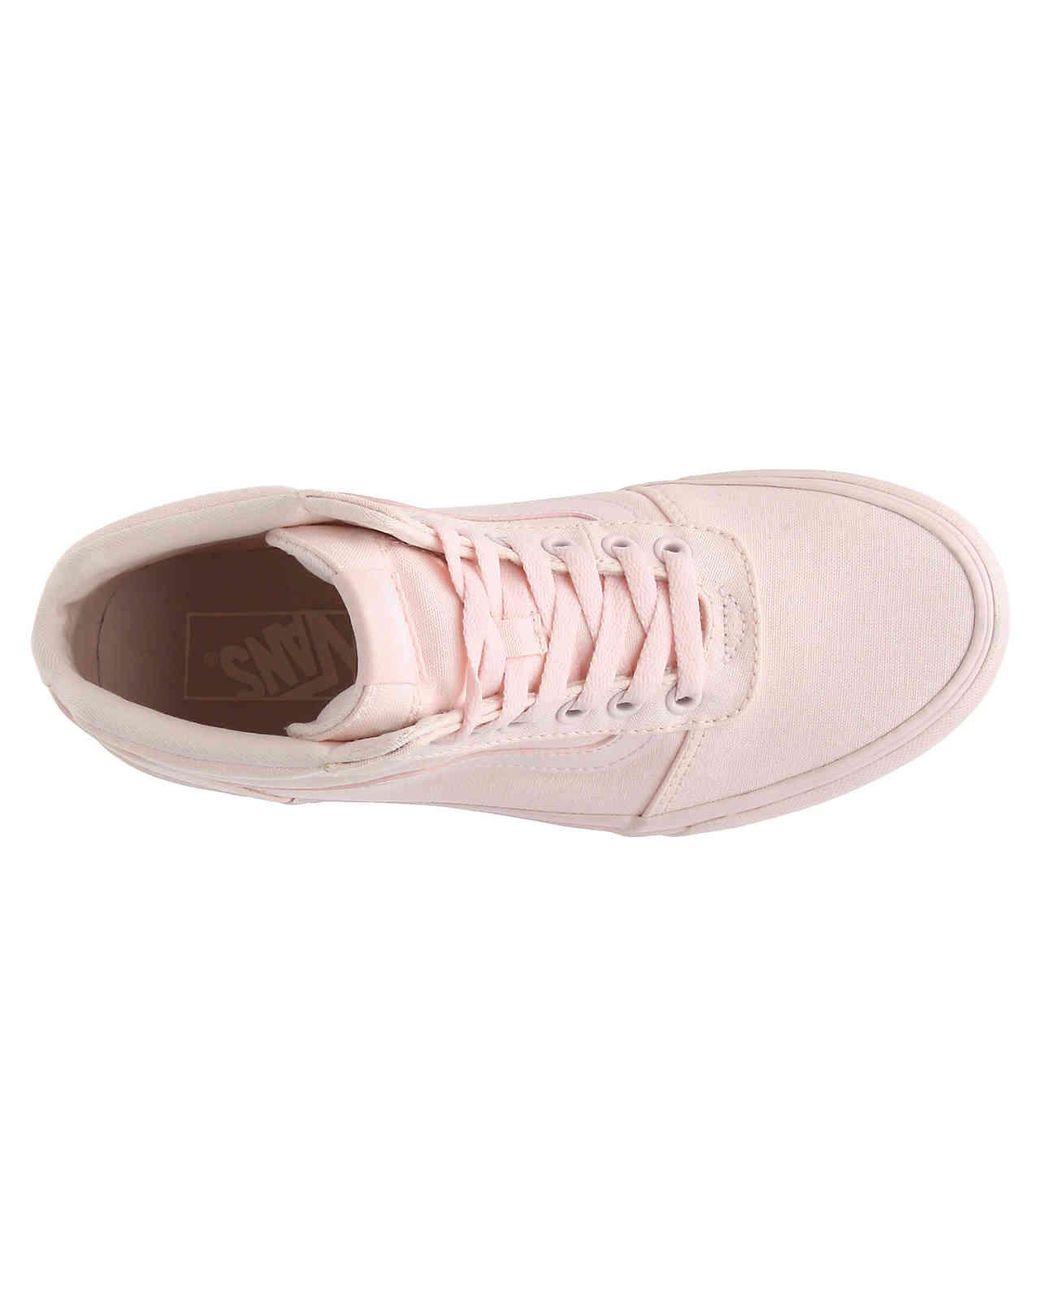 Vans Ward Hi High-top Sneaker in Pink | Lyst